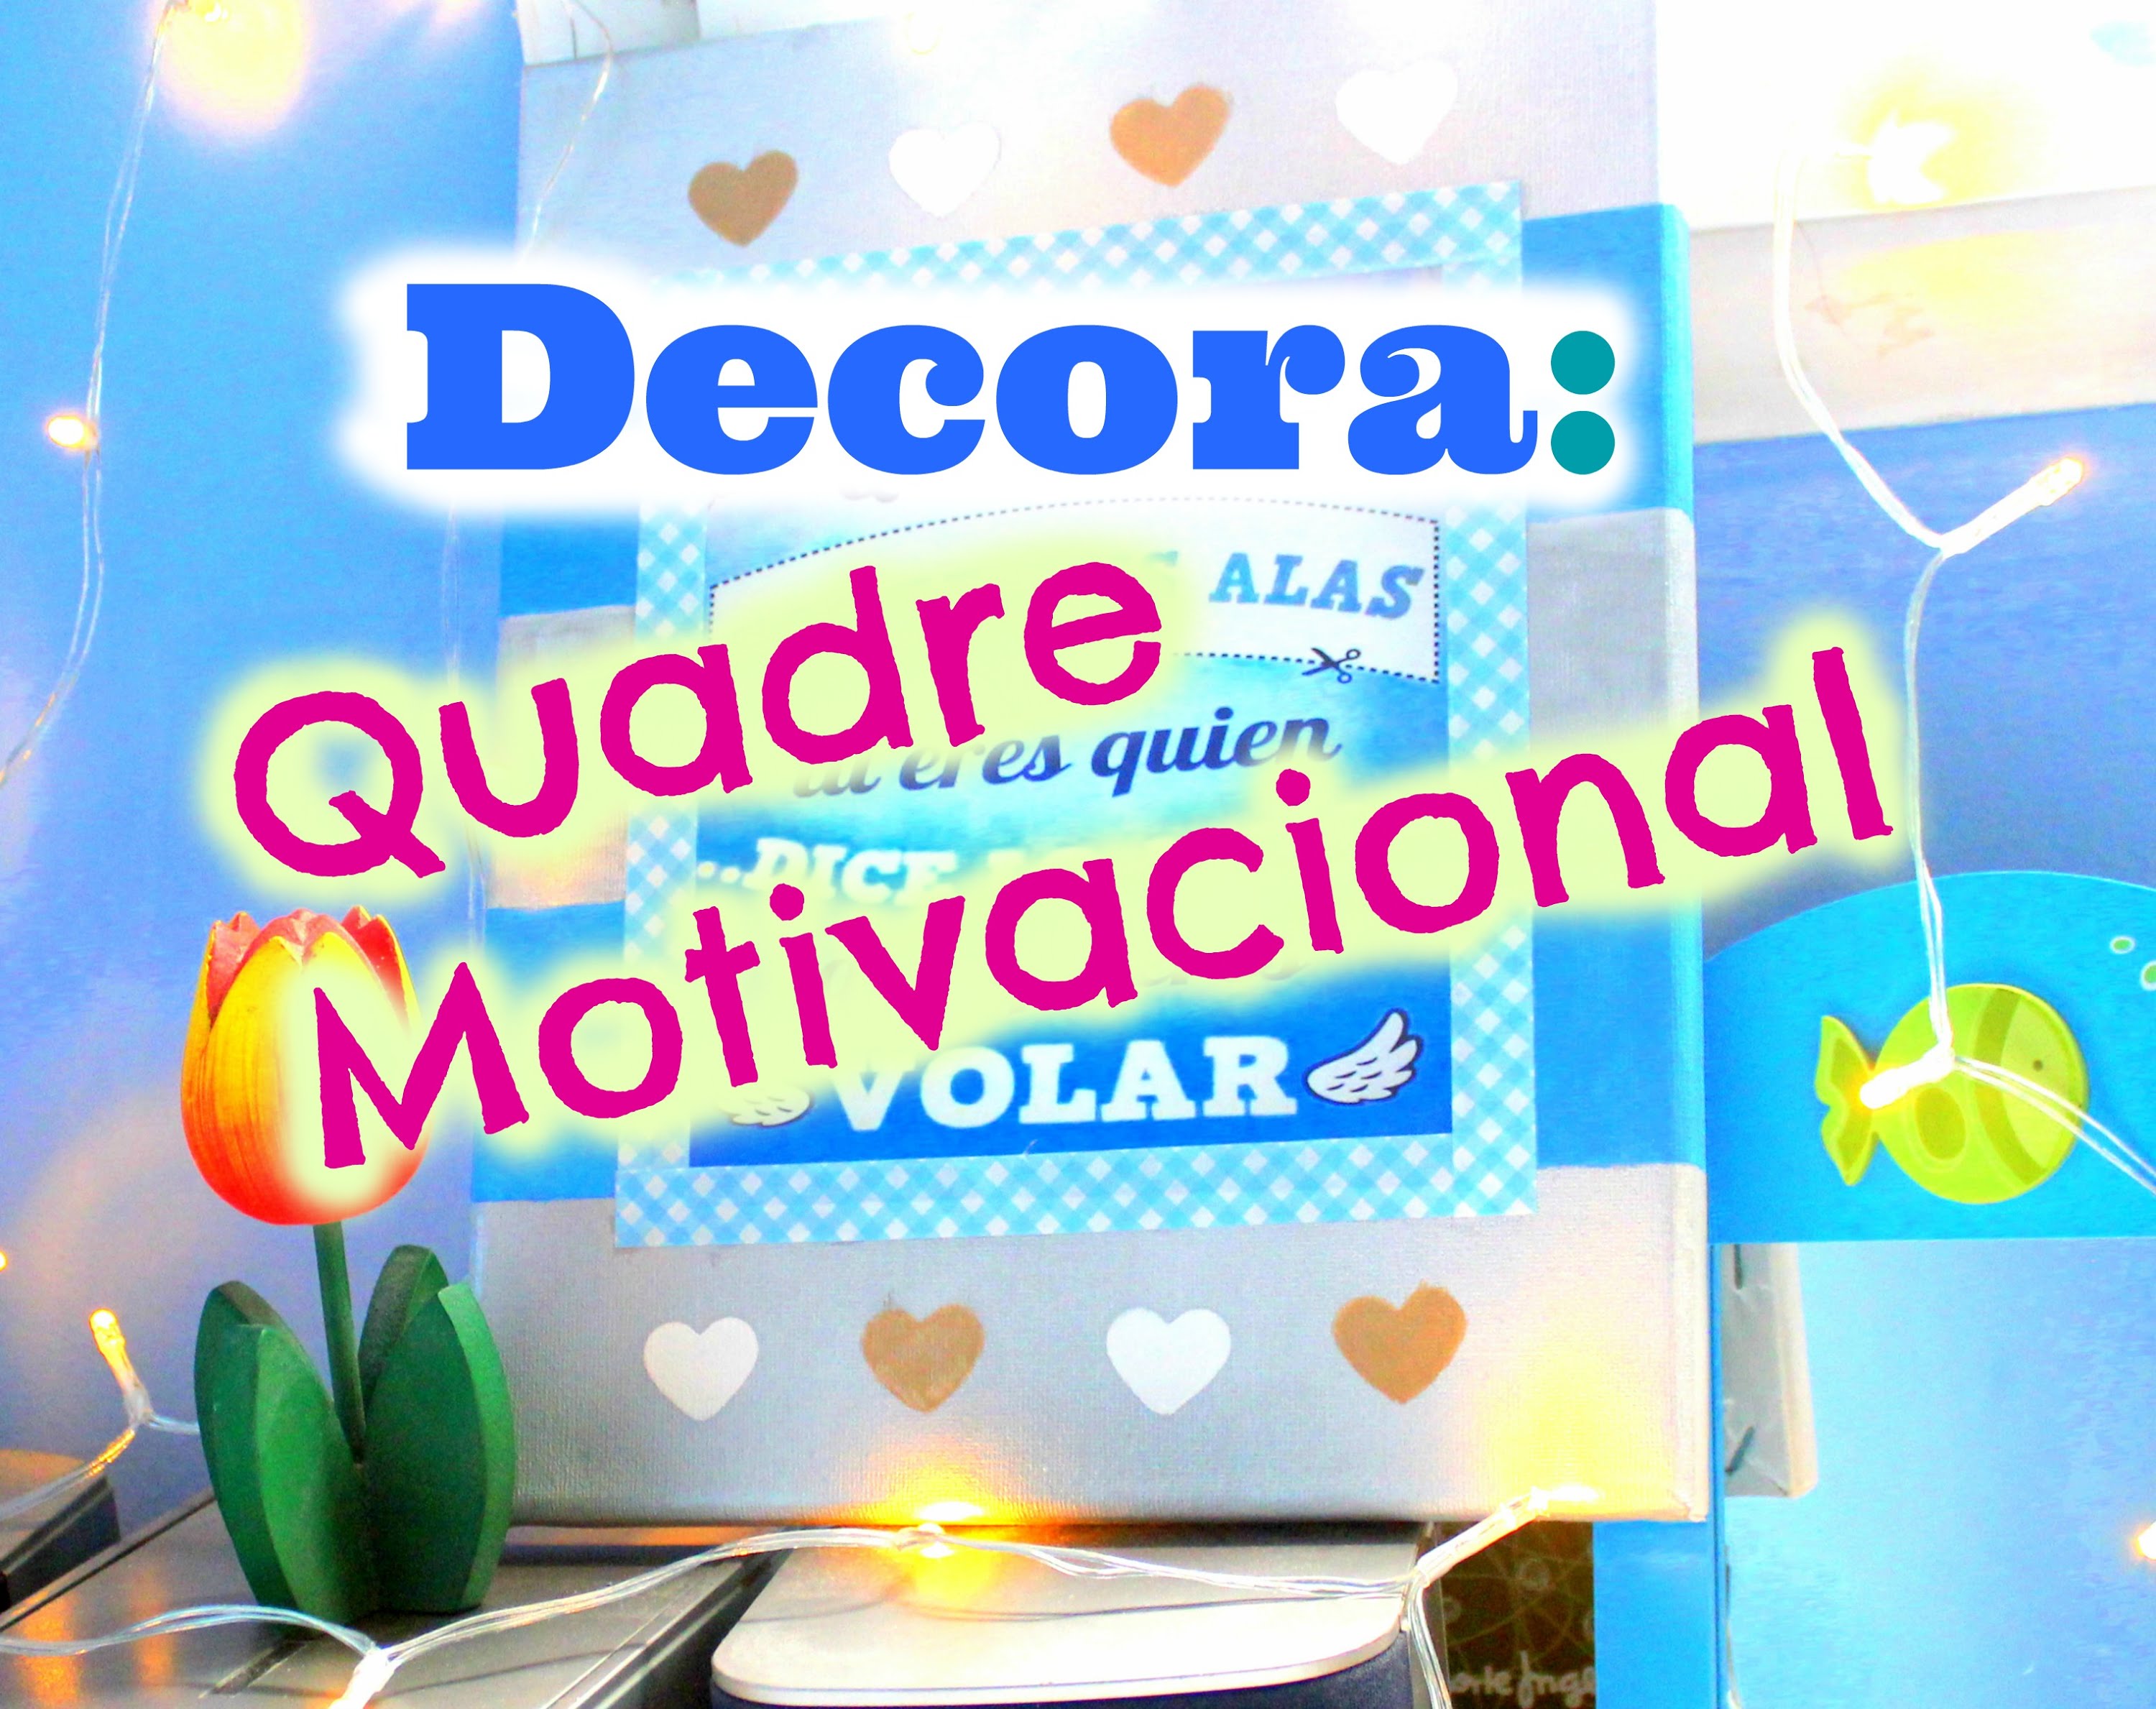 Decora: Quadre Motivacional ( Català ) de Fredolic2013